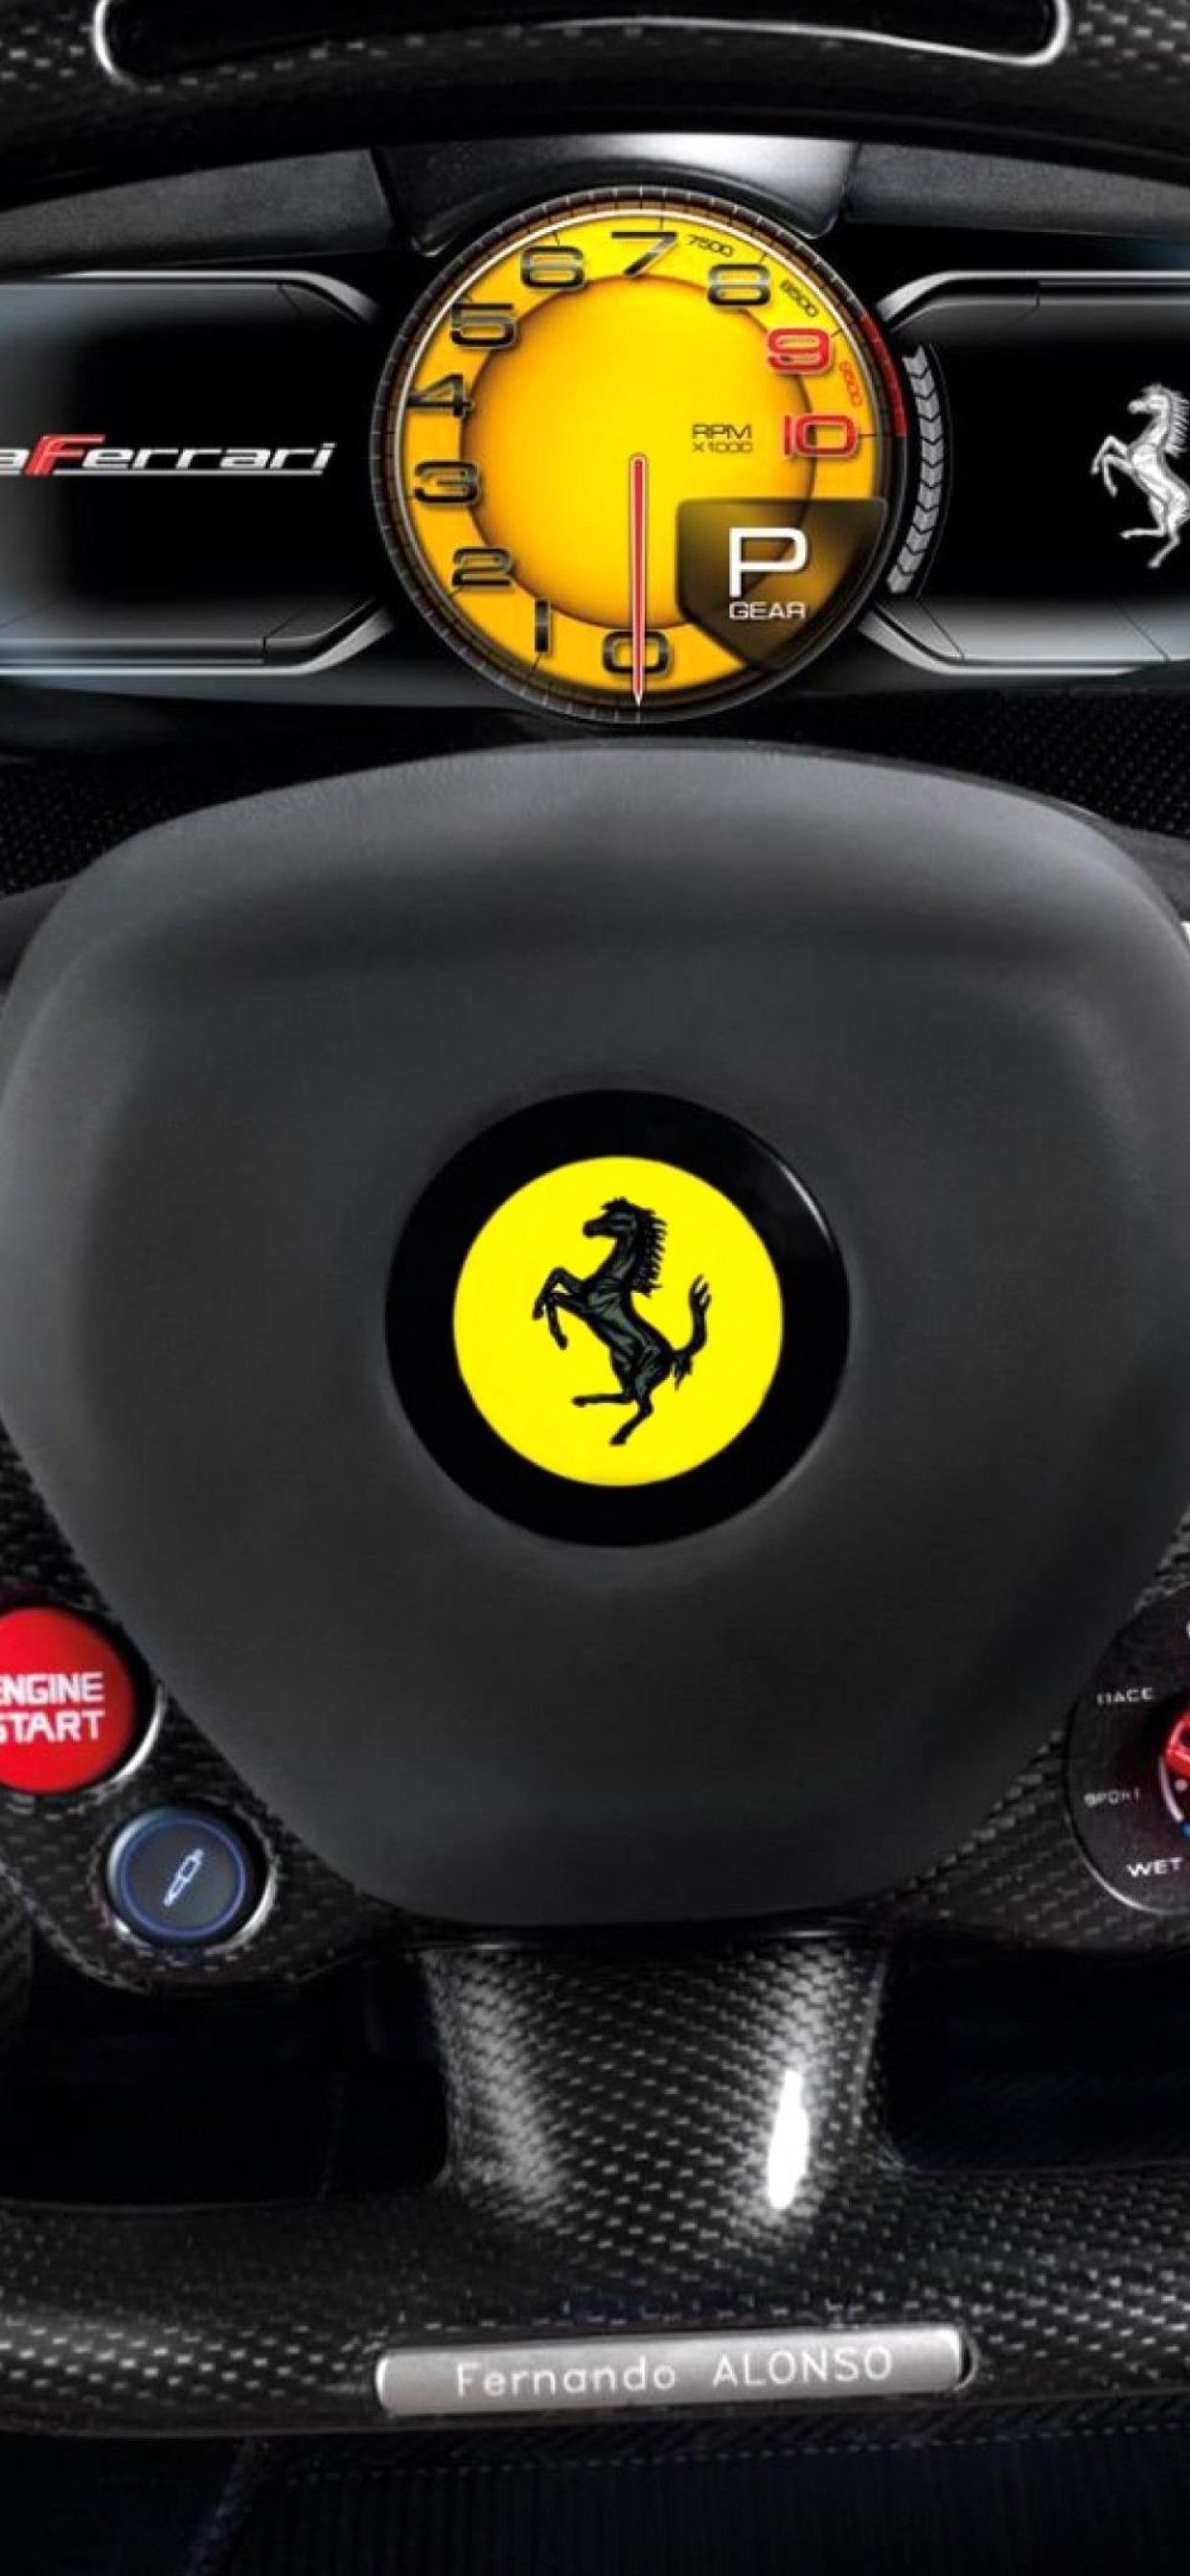 Ferrari Steering iPhone XS MAX HD 4k Wallpaper, Image